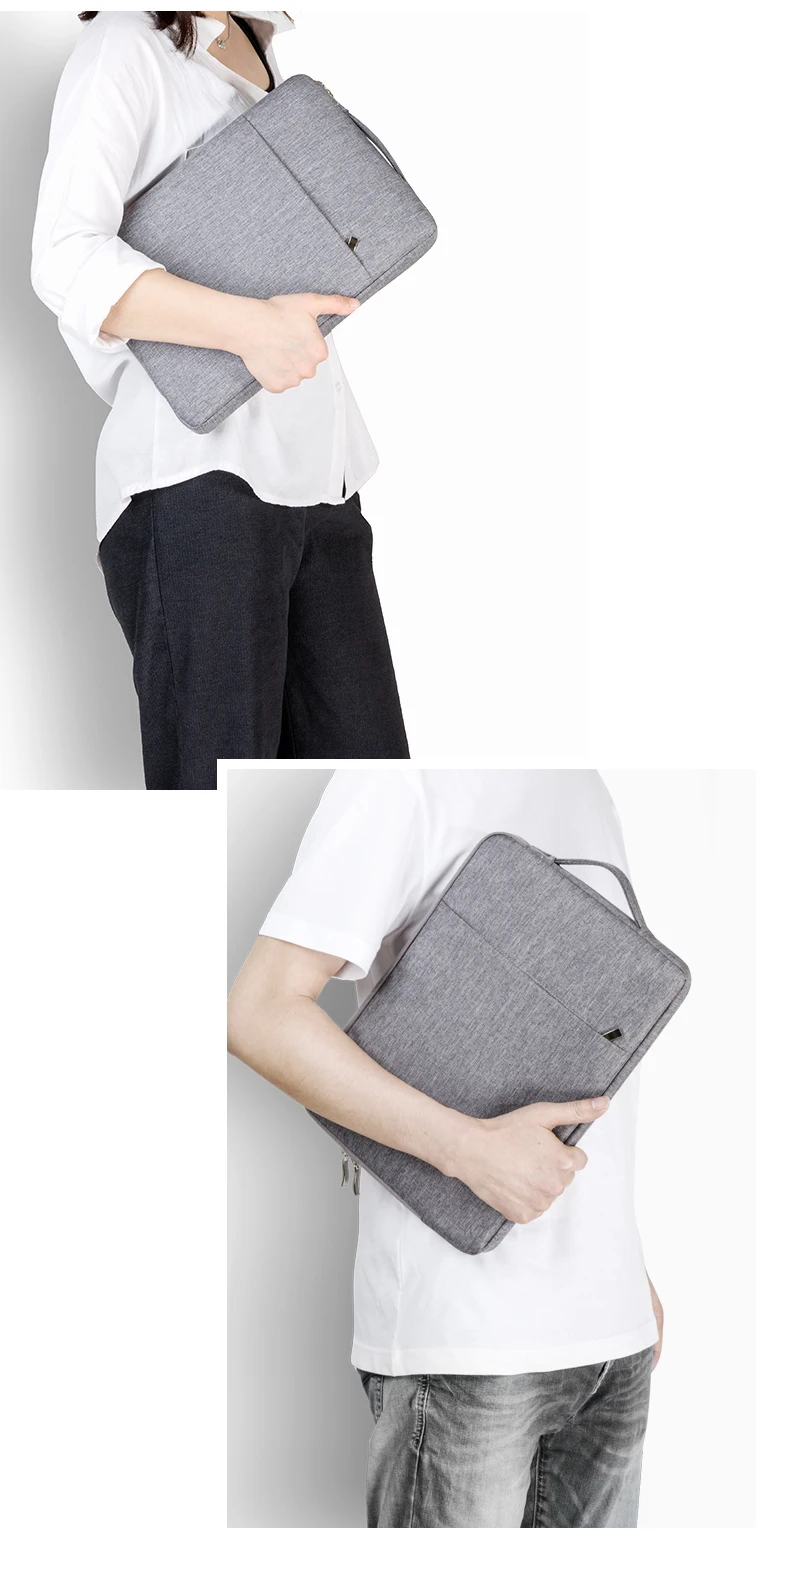 Чехол-сумочка для huawei MediaPad M5 Lite 10''BAH2-L09/W19 10,", водонепроницаемый чехол-сумка, чехол для планшета M5 Lite 10